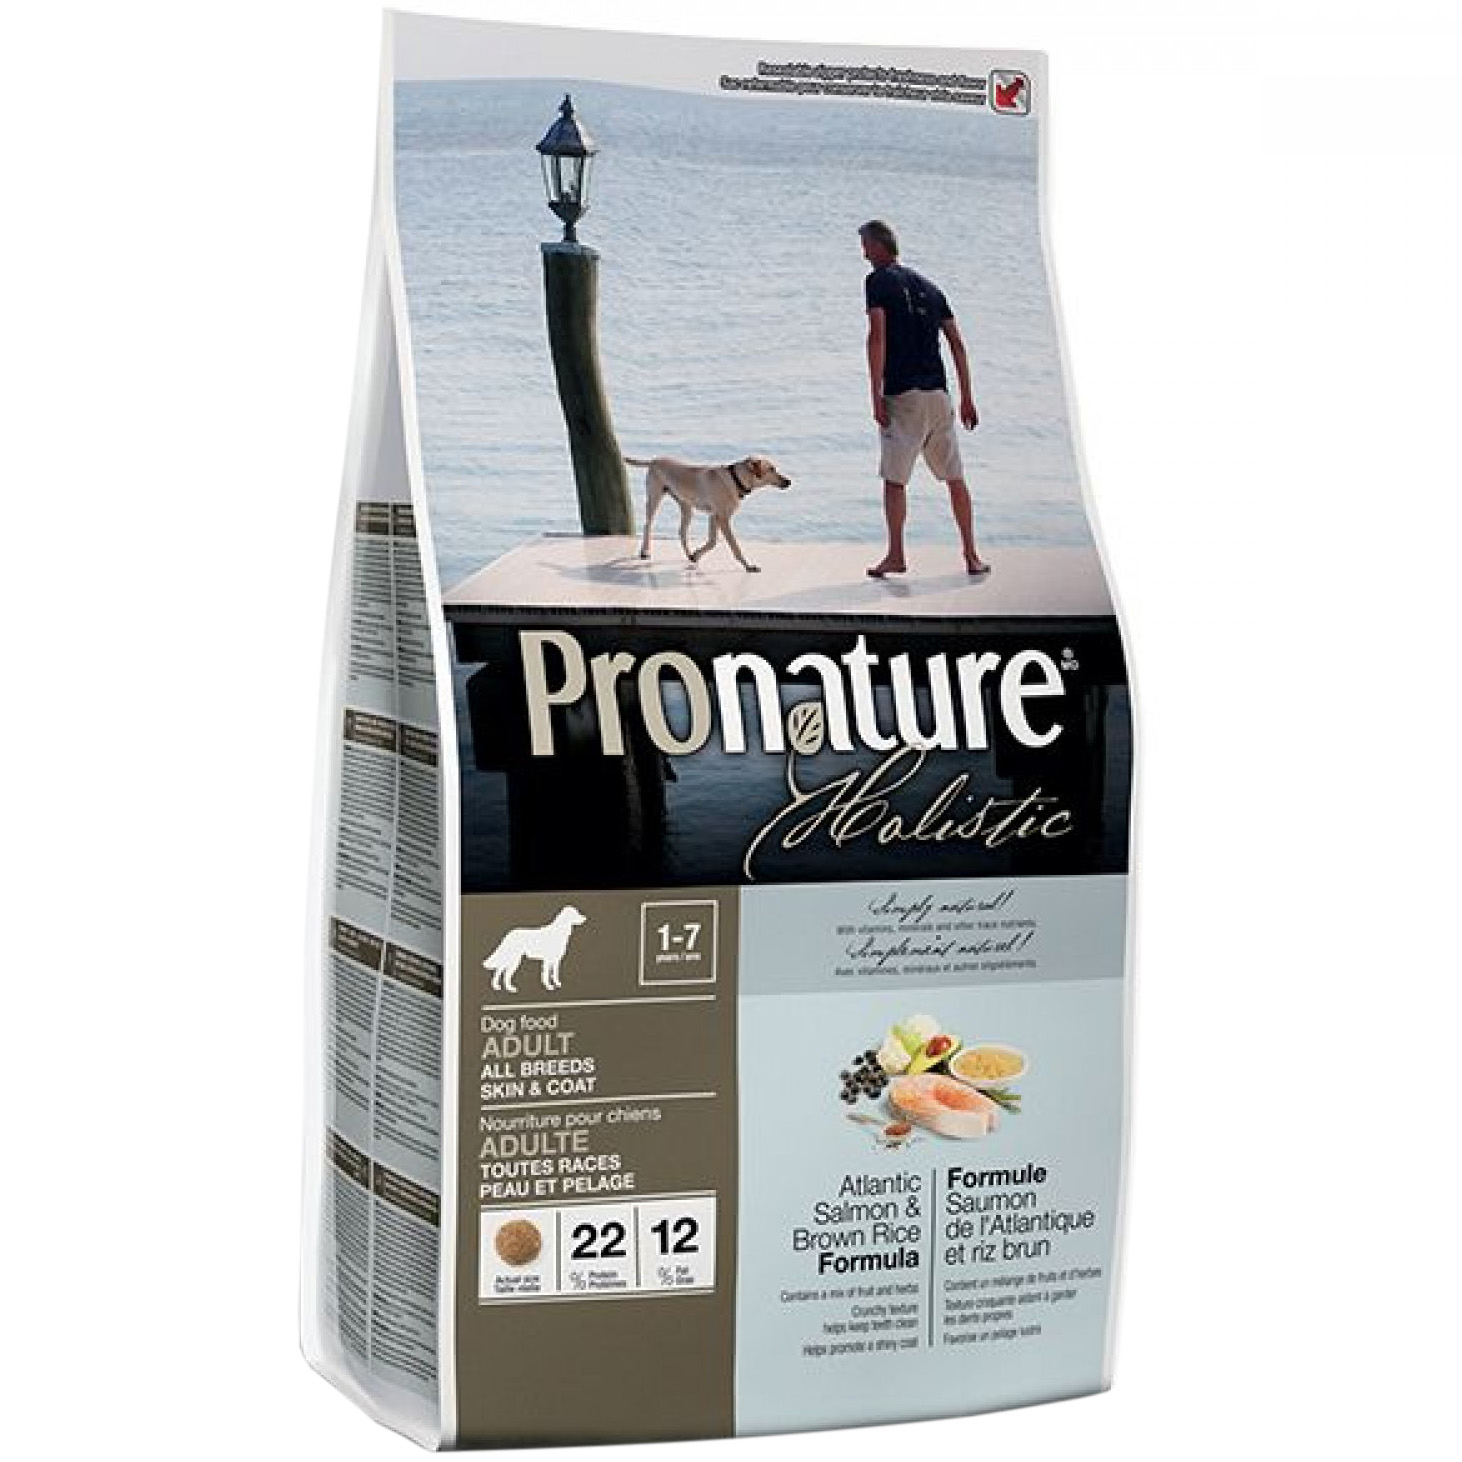 Сухий корм для собак Pronature Holistic з атлантичним лососем та коричневим рисом 13.6 кг - фото 1